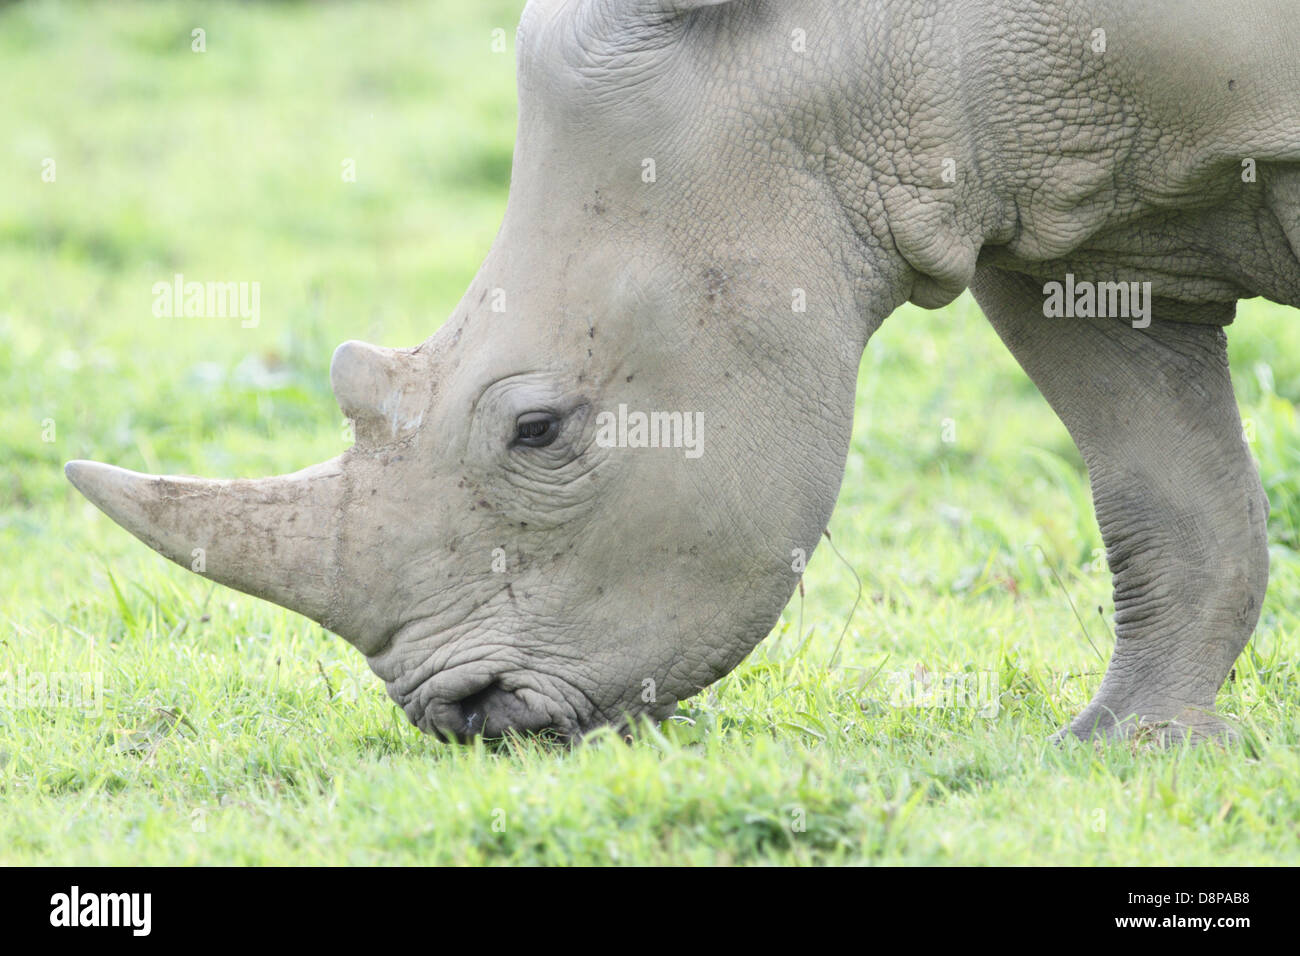 White Rhino in a UK zoo., Stock Photo